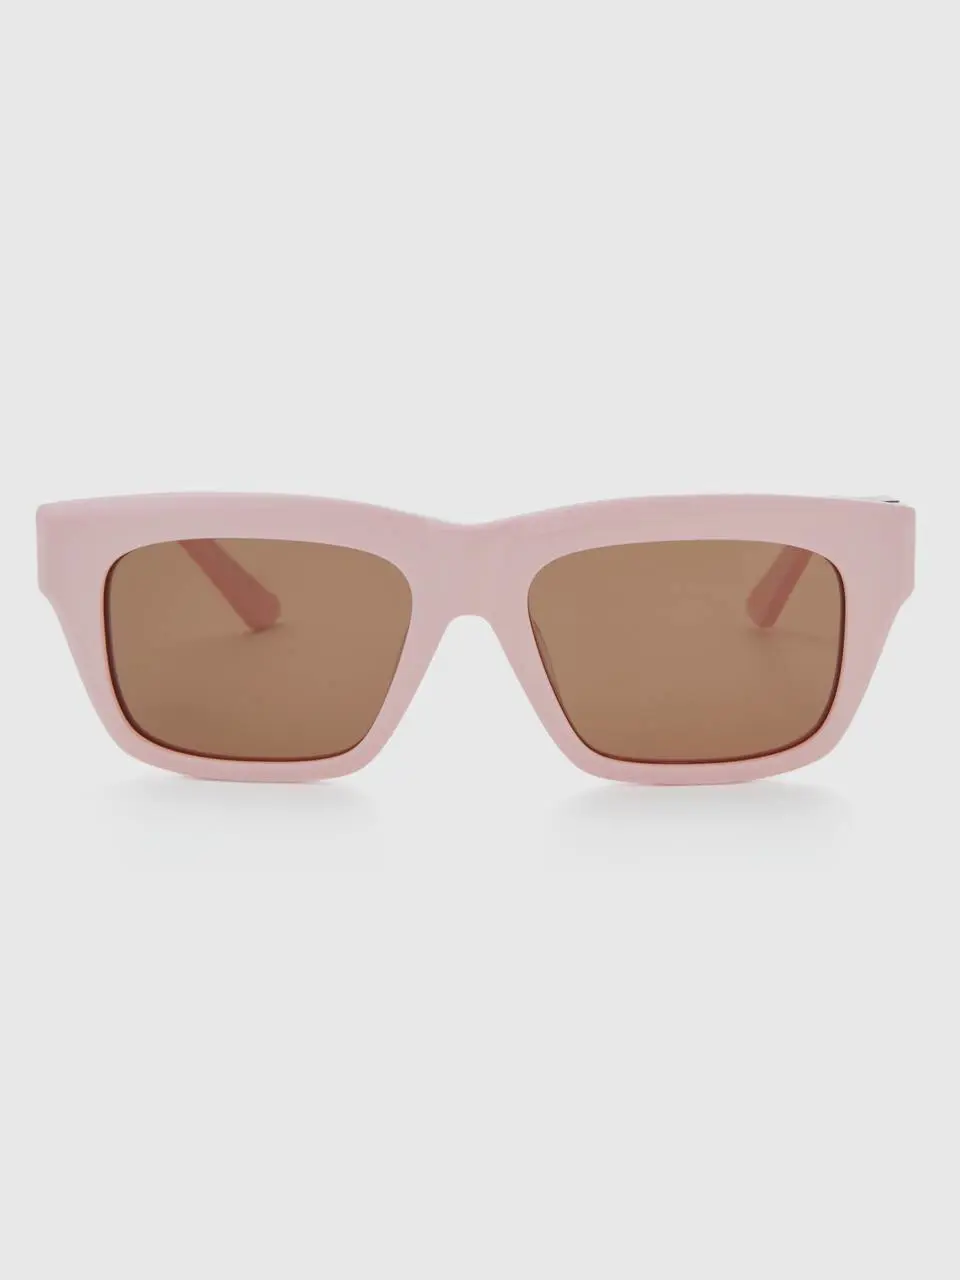 Benetton pink rectangular sunglasses. 1